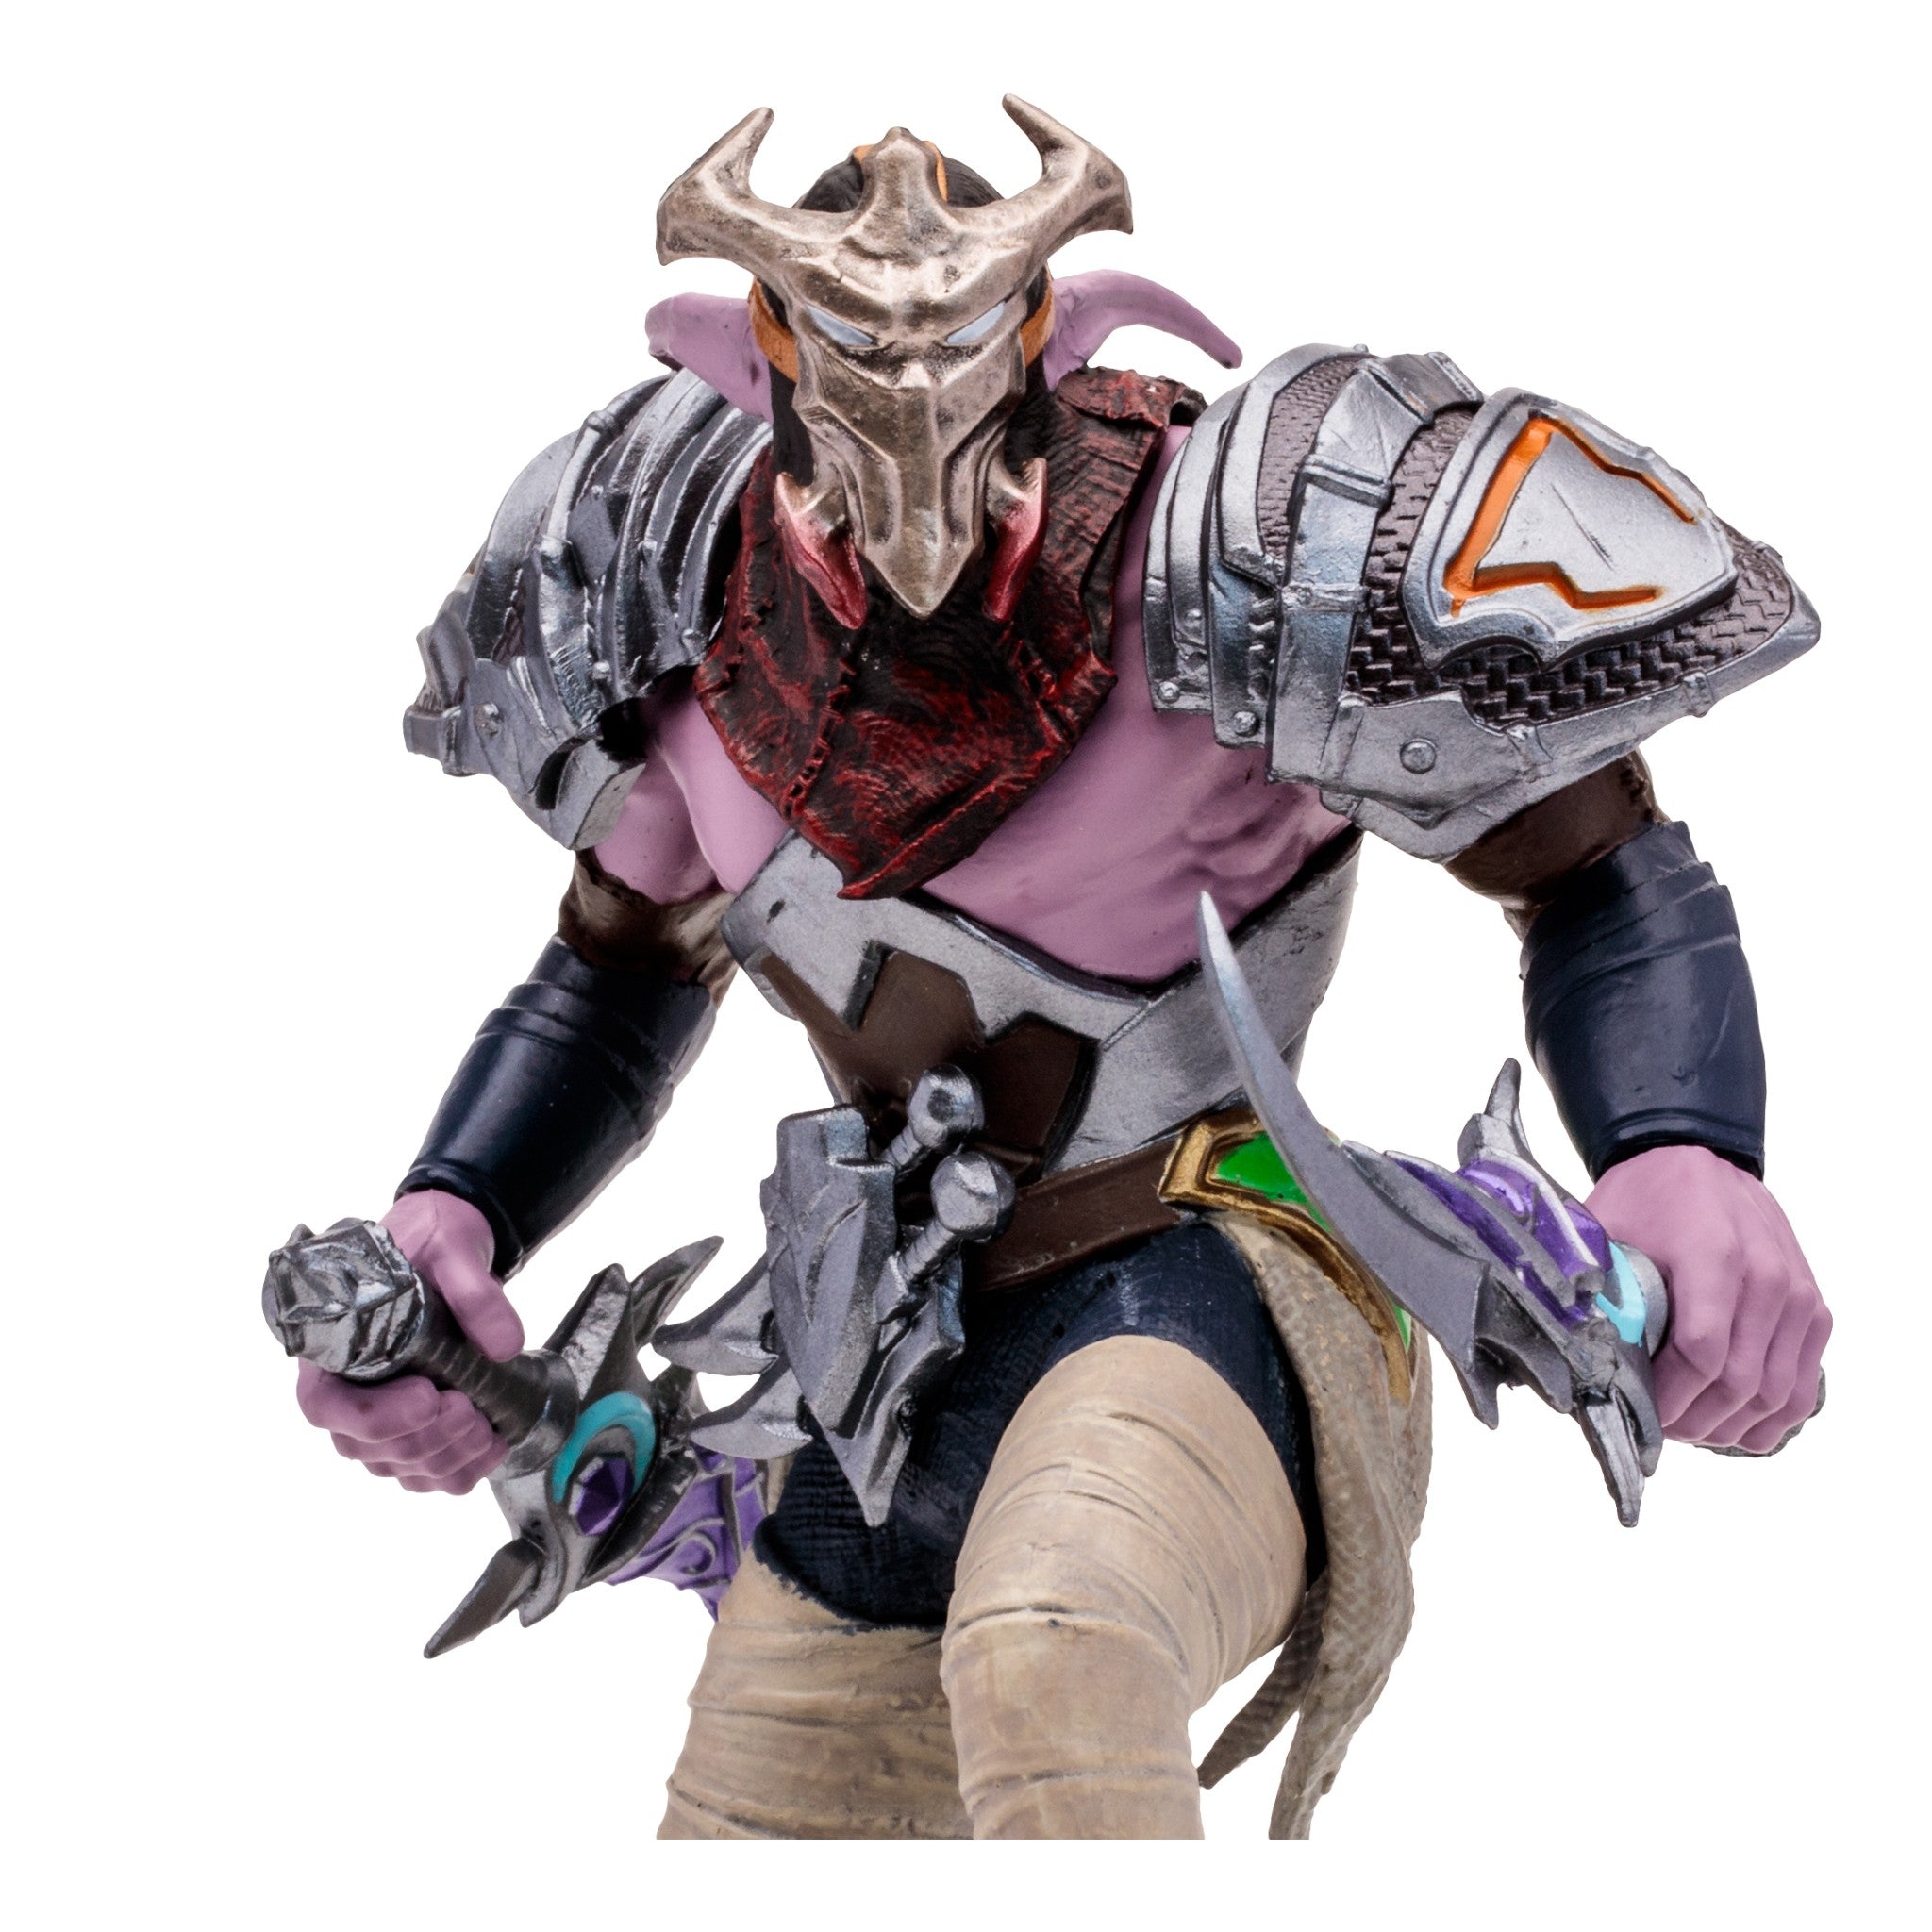 World of Warcraft Elf Druid Rogue 7" Common Figure - McFarlane Toys